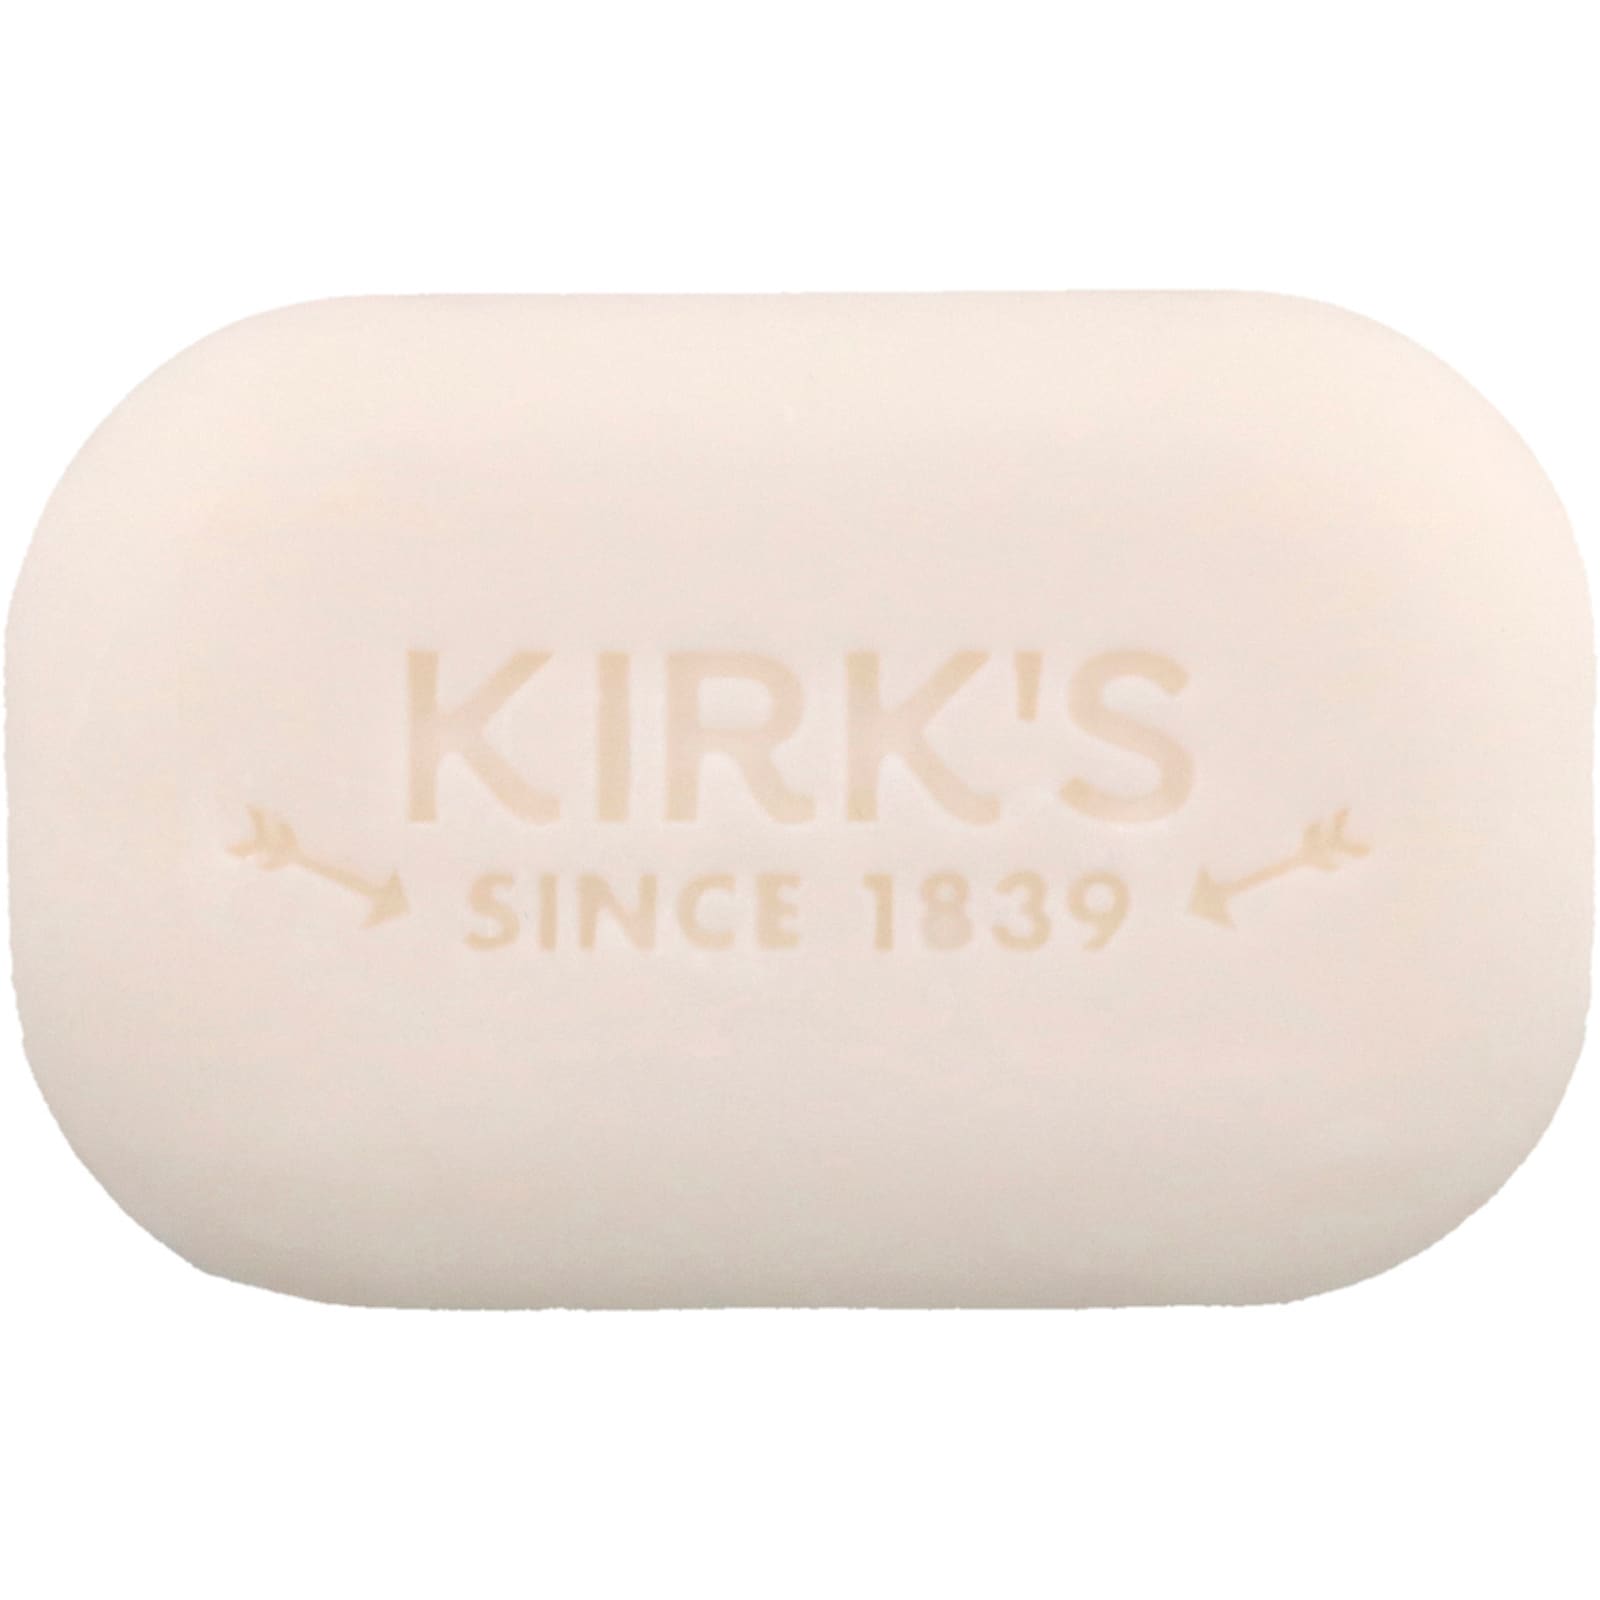 Kirk's Original Coco Castile Bar Soap Fragrance Free 4 Ounces 24 Pack 